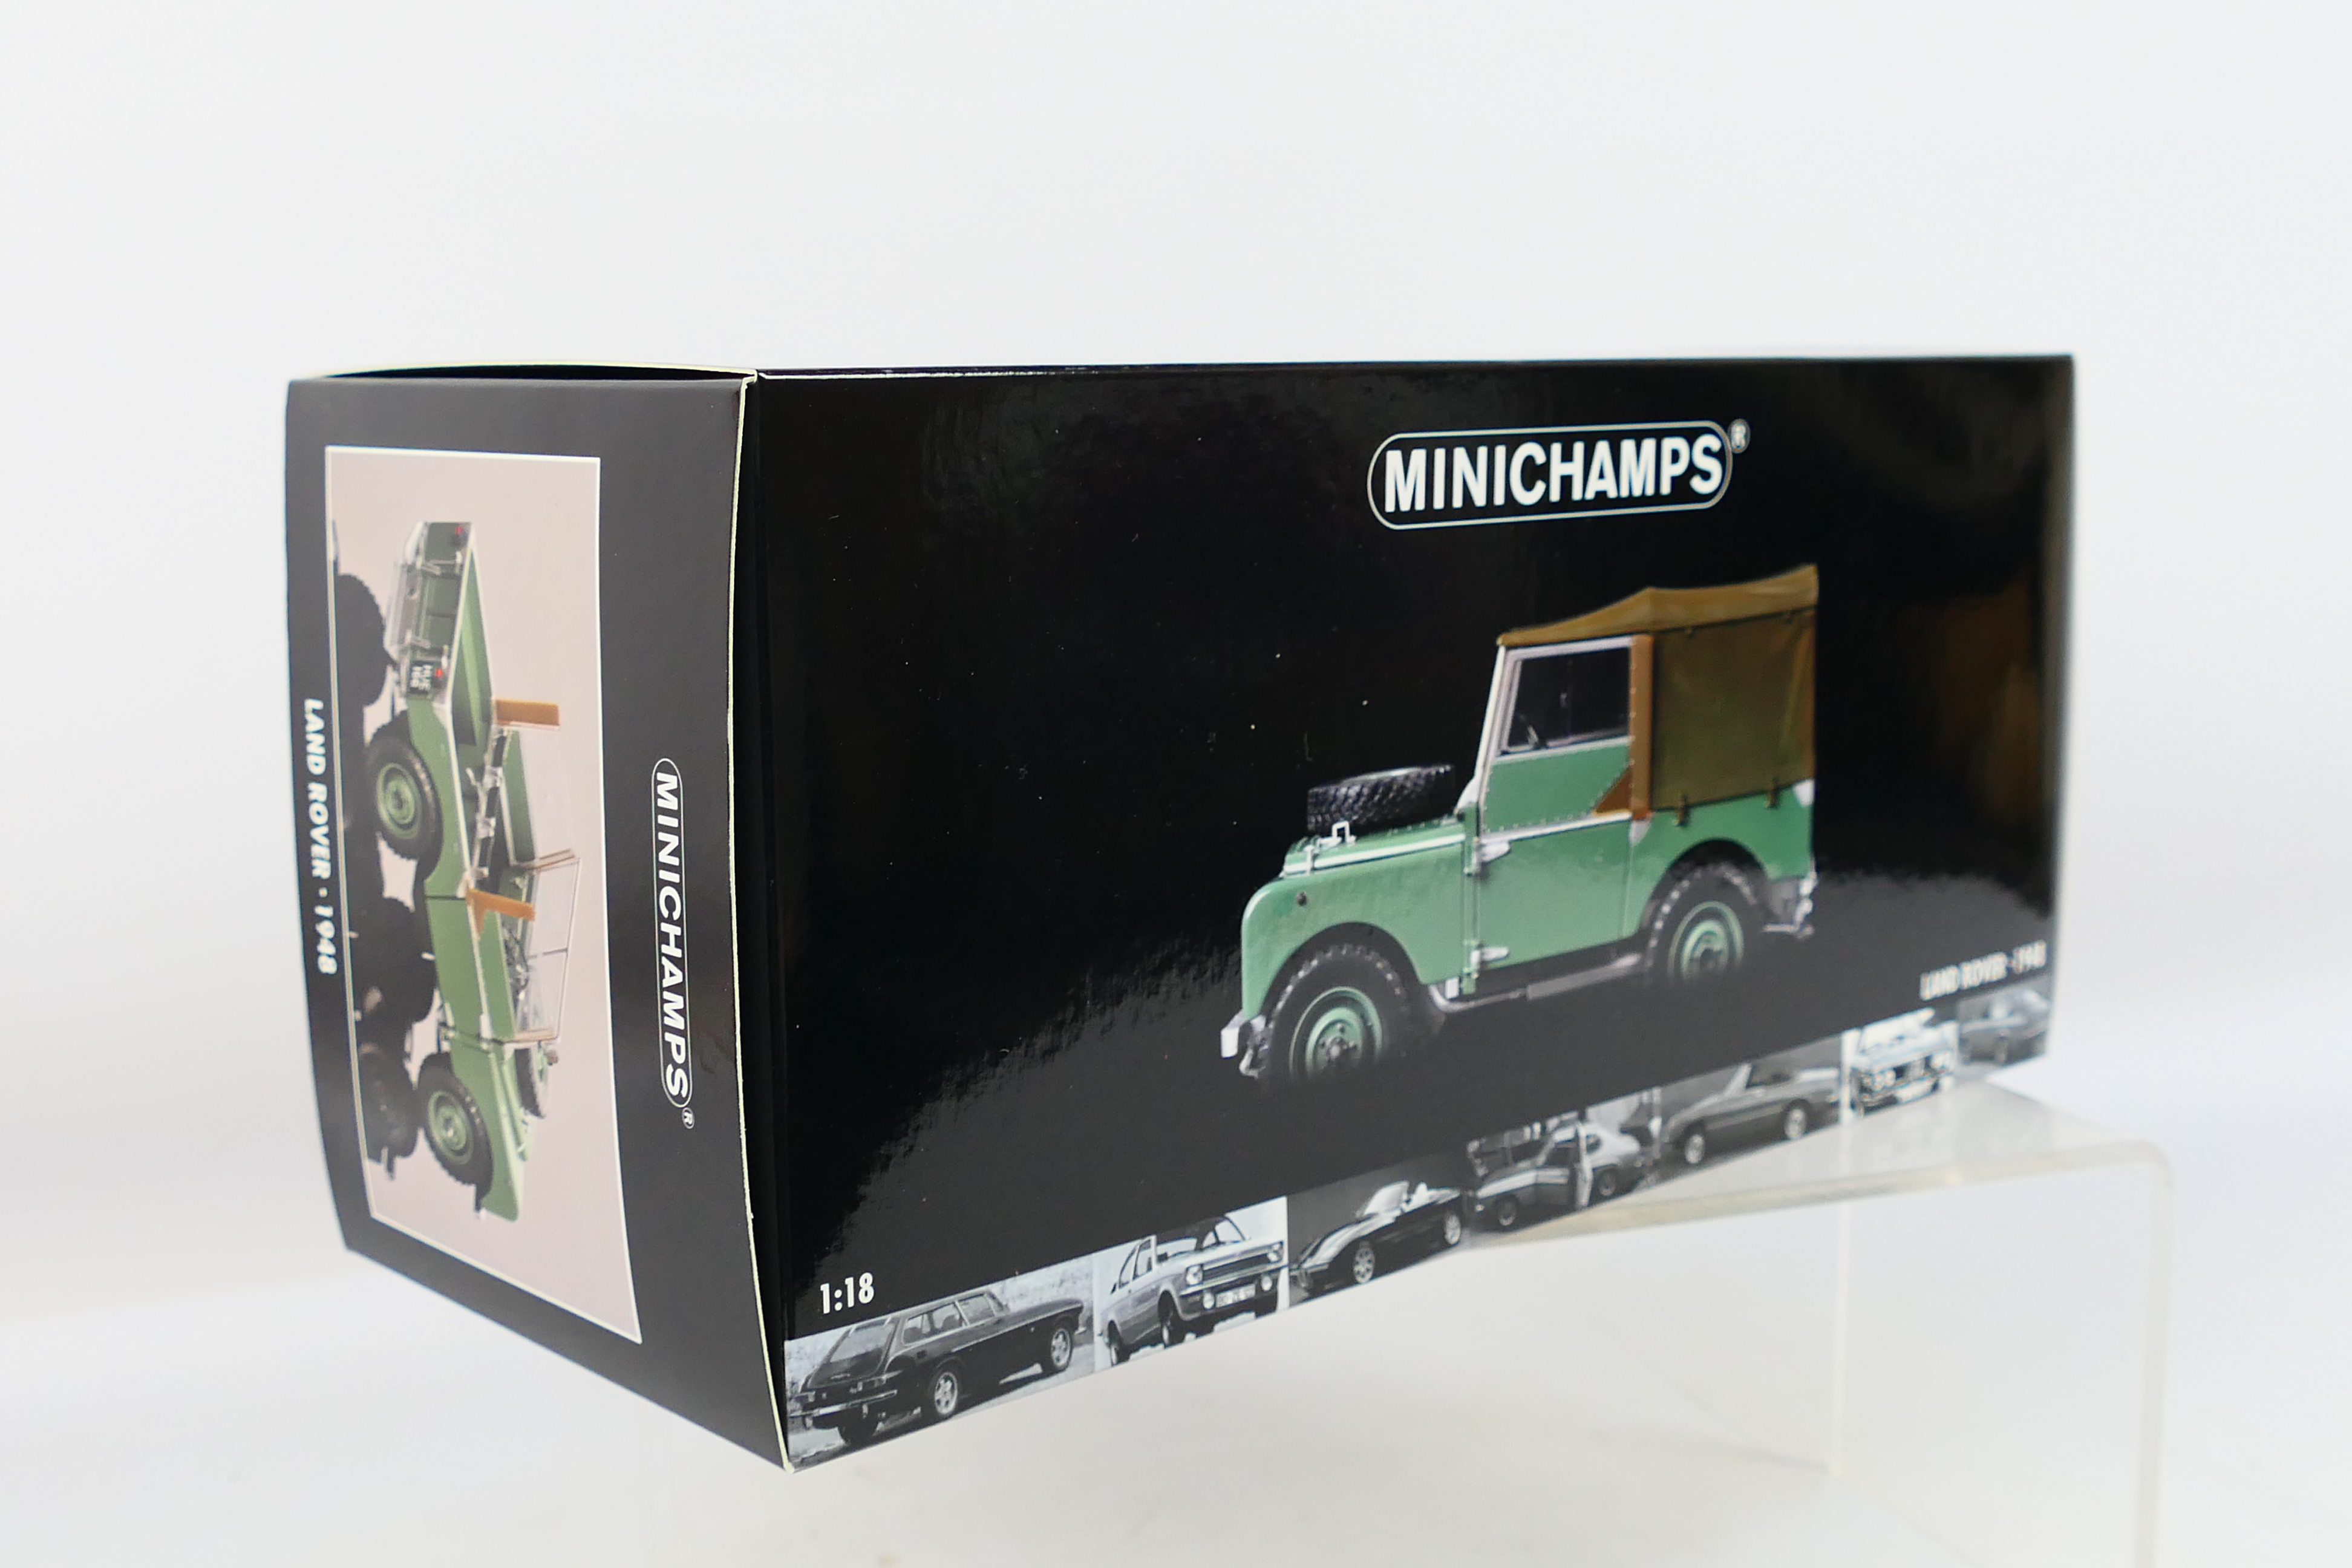 Minichamps - A boxed Minichamps #150168900 1:18 scale 1948 Land Rover. - Image 6 of 6